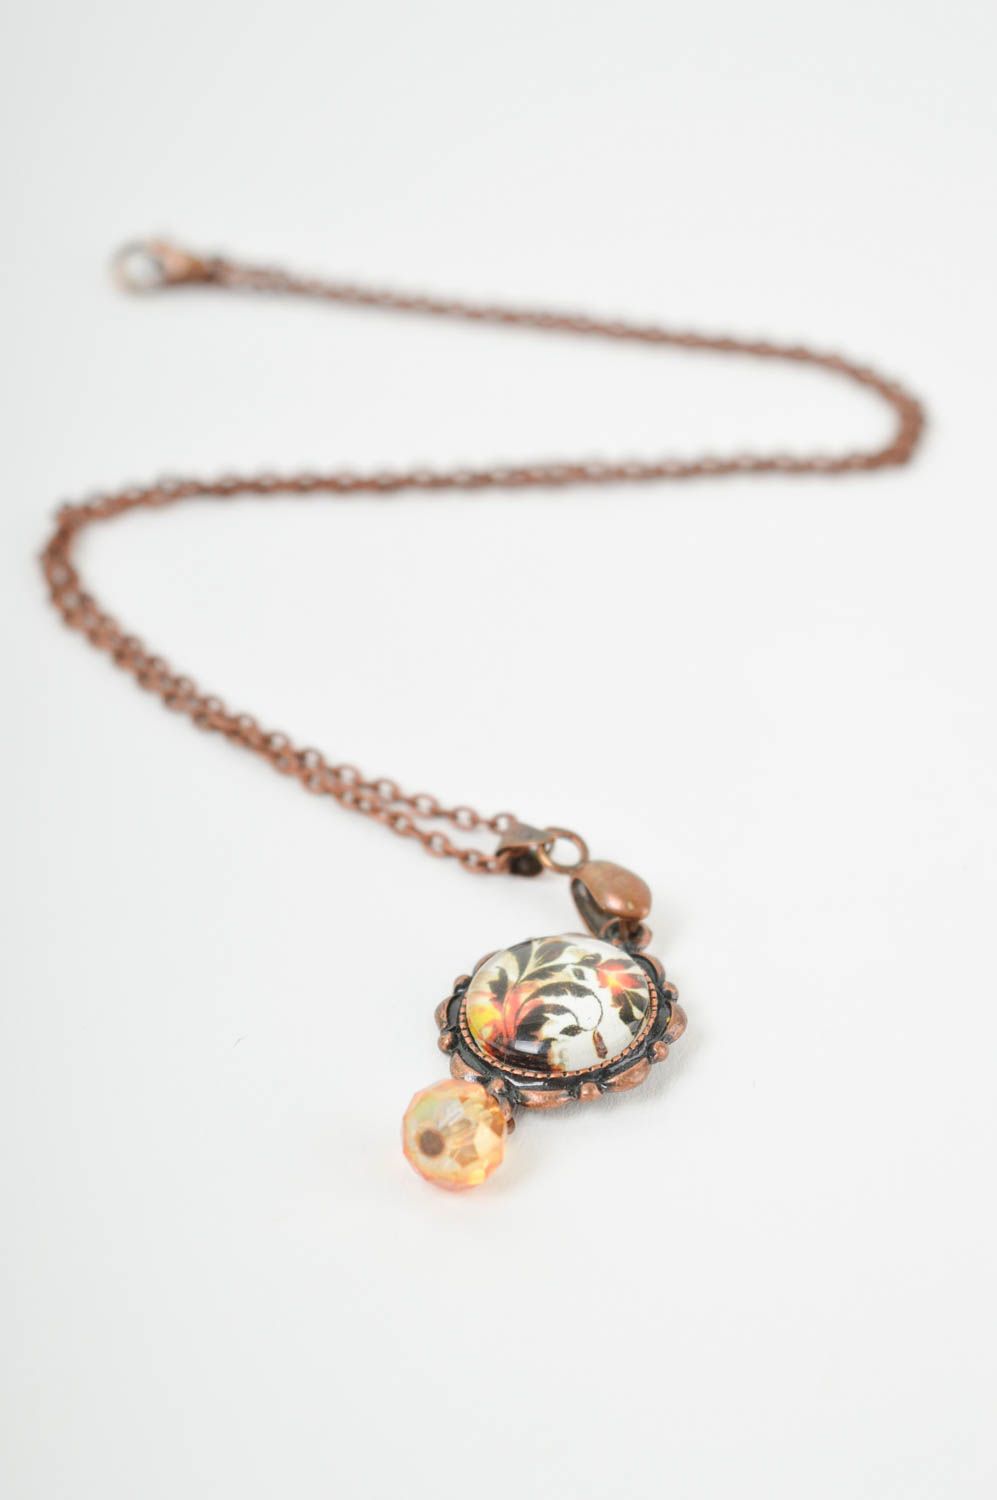 Small handmade beaded pendant metal pendant on chain artisan jewelry designs photo 4